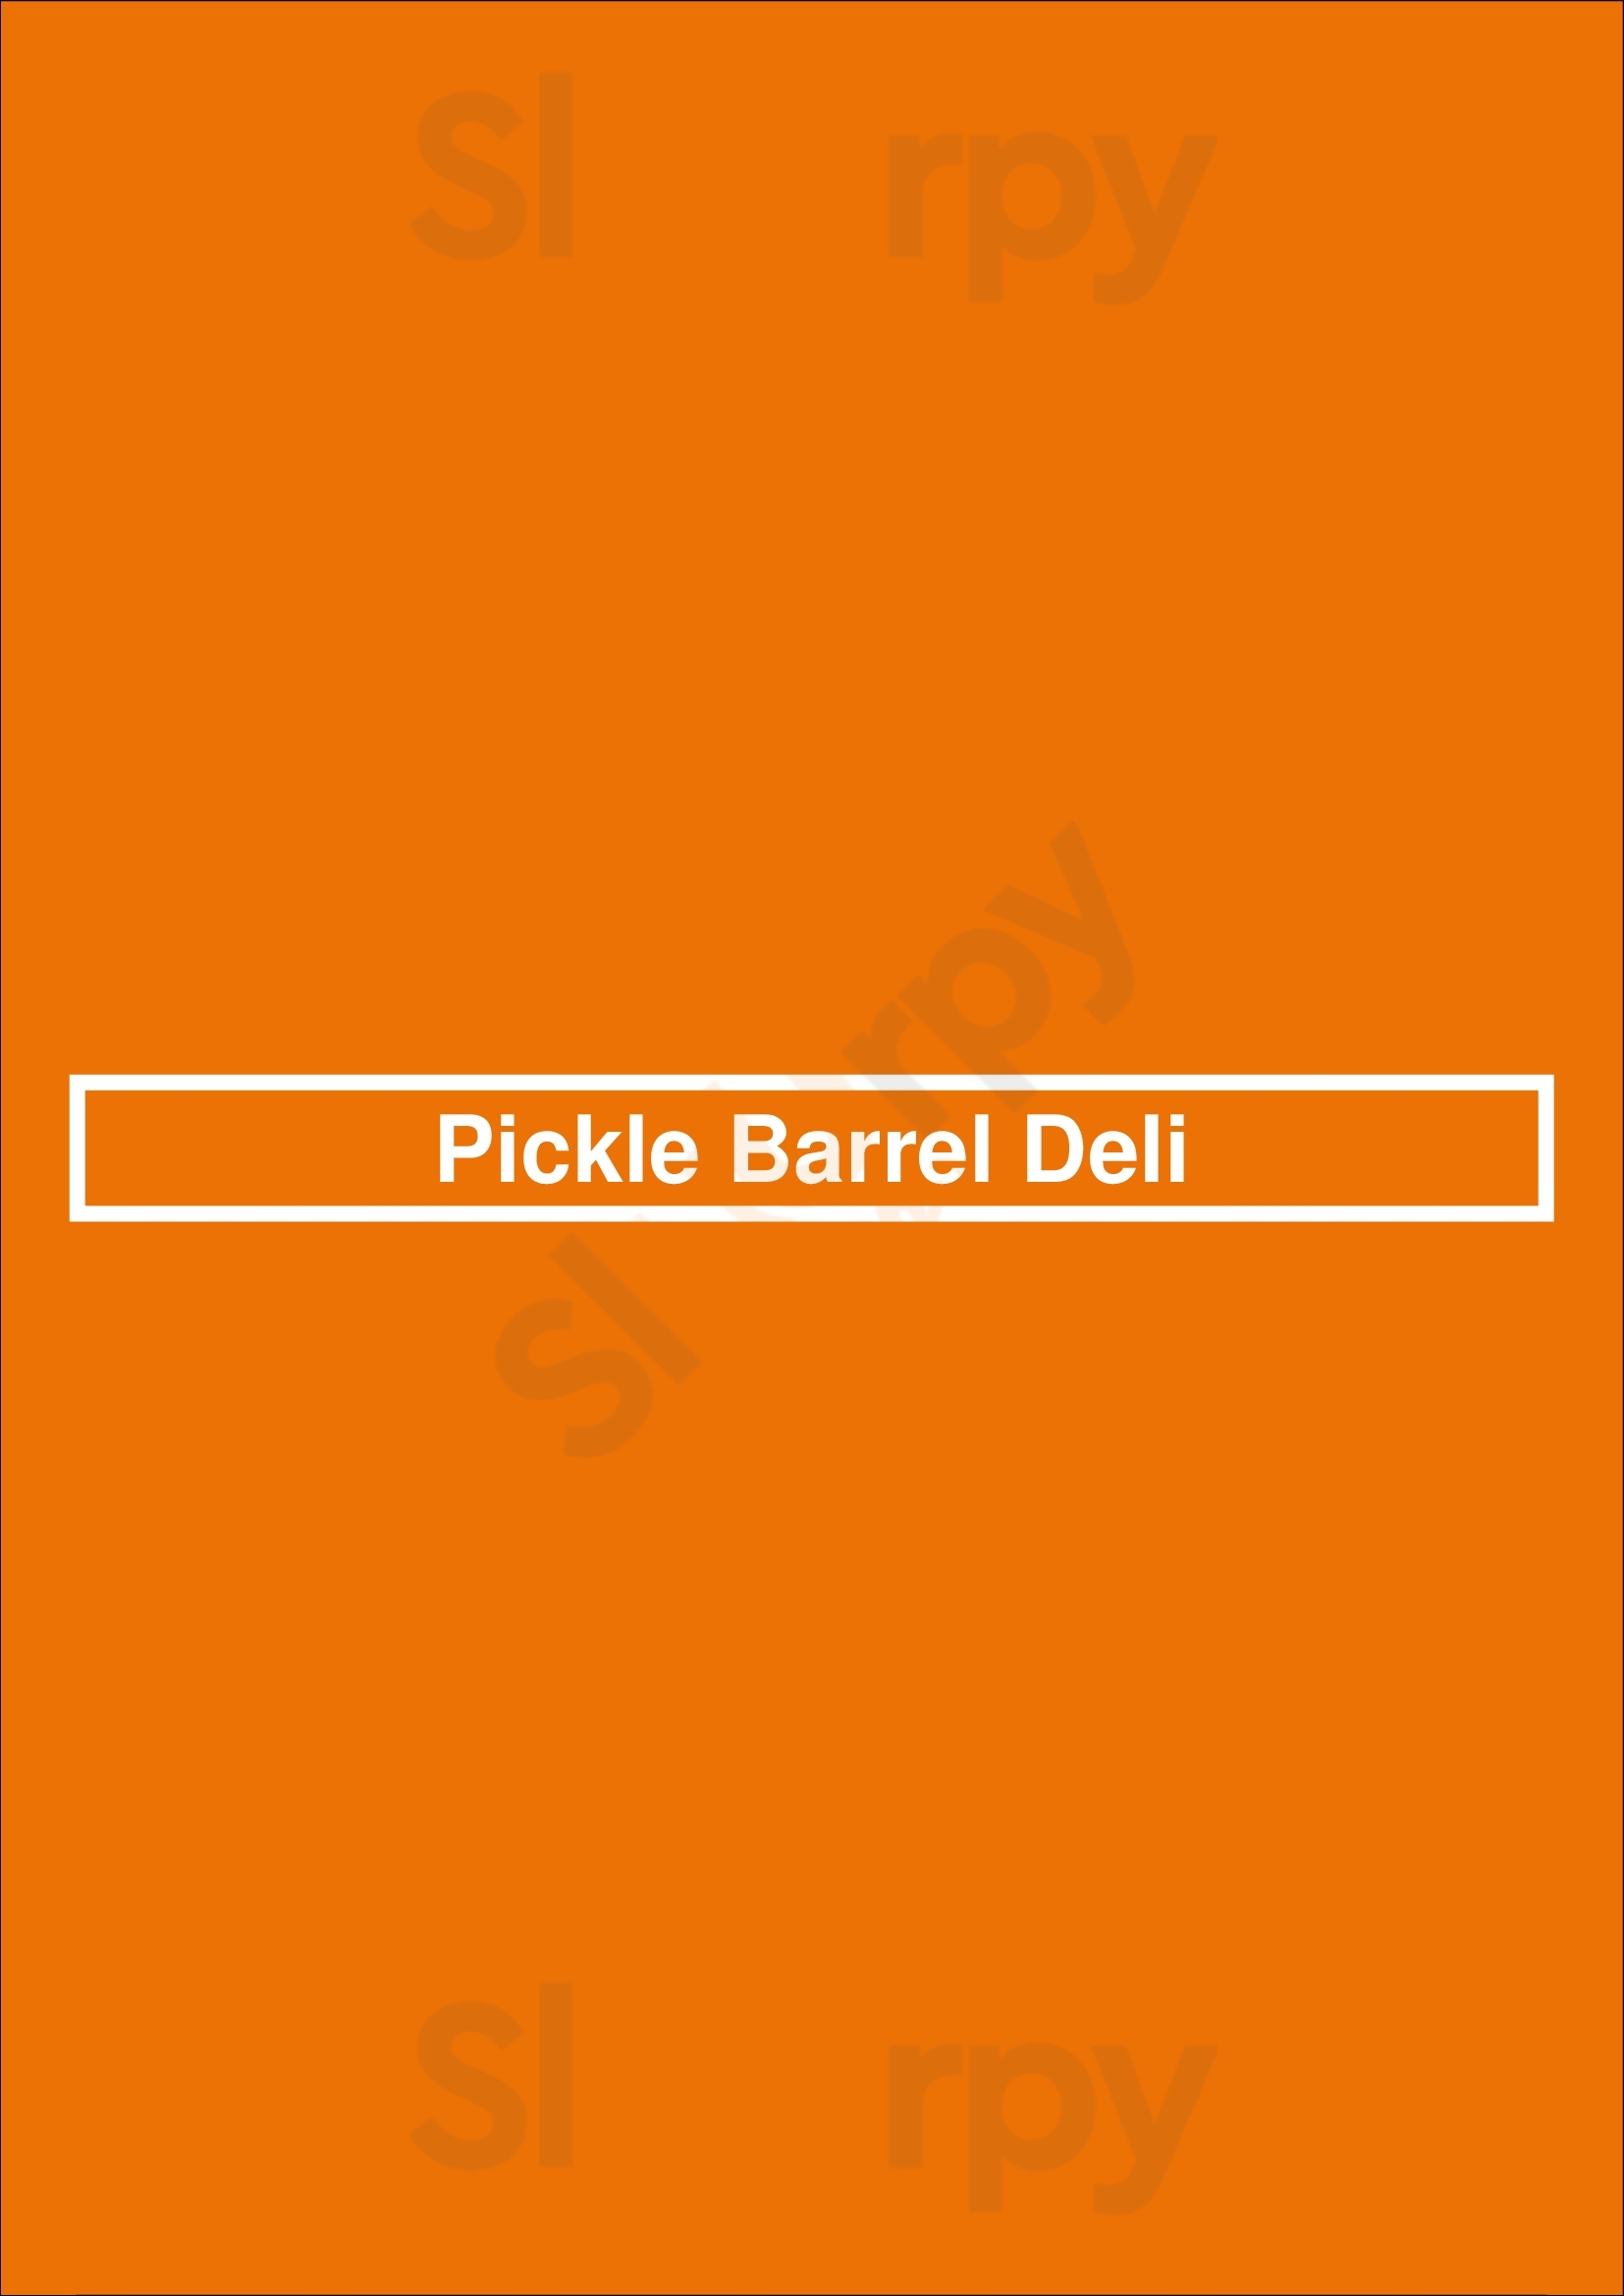 Pickle Barrel Toronto Menu - 1